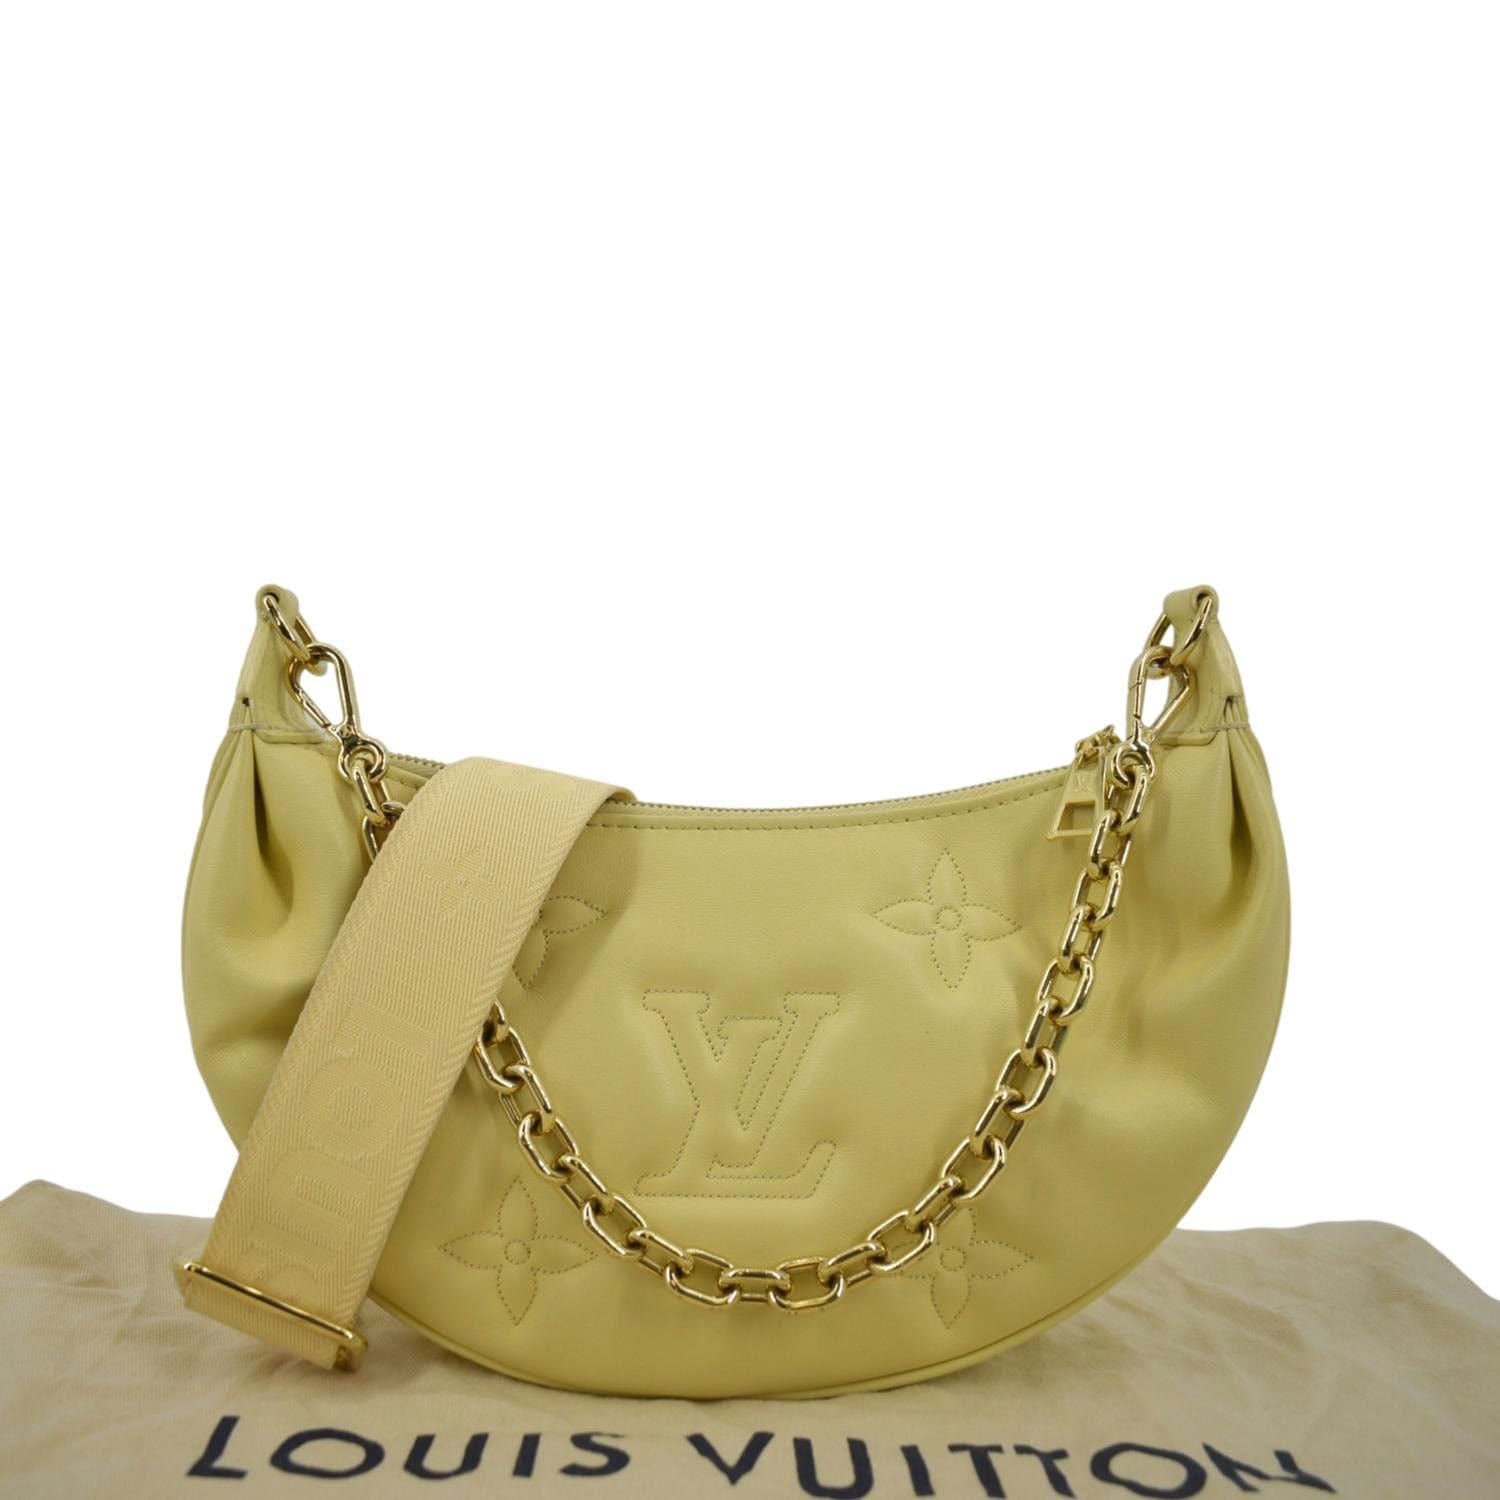 Louis Vuitton: Louis Vuitton's Bubblegram: A New Collection Of